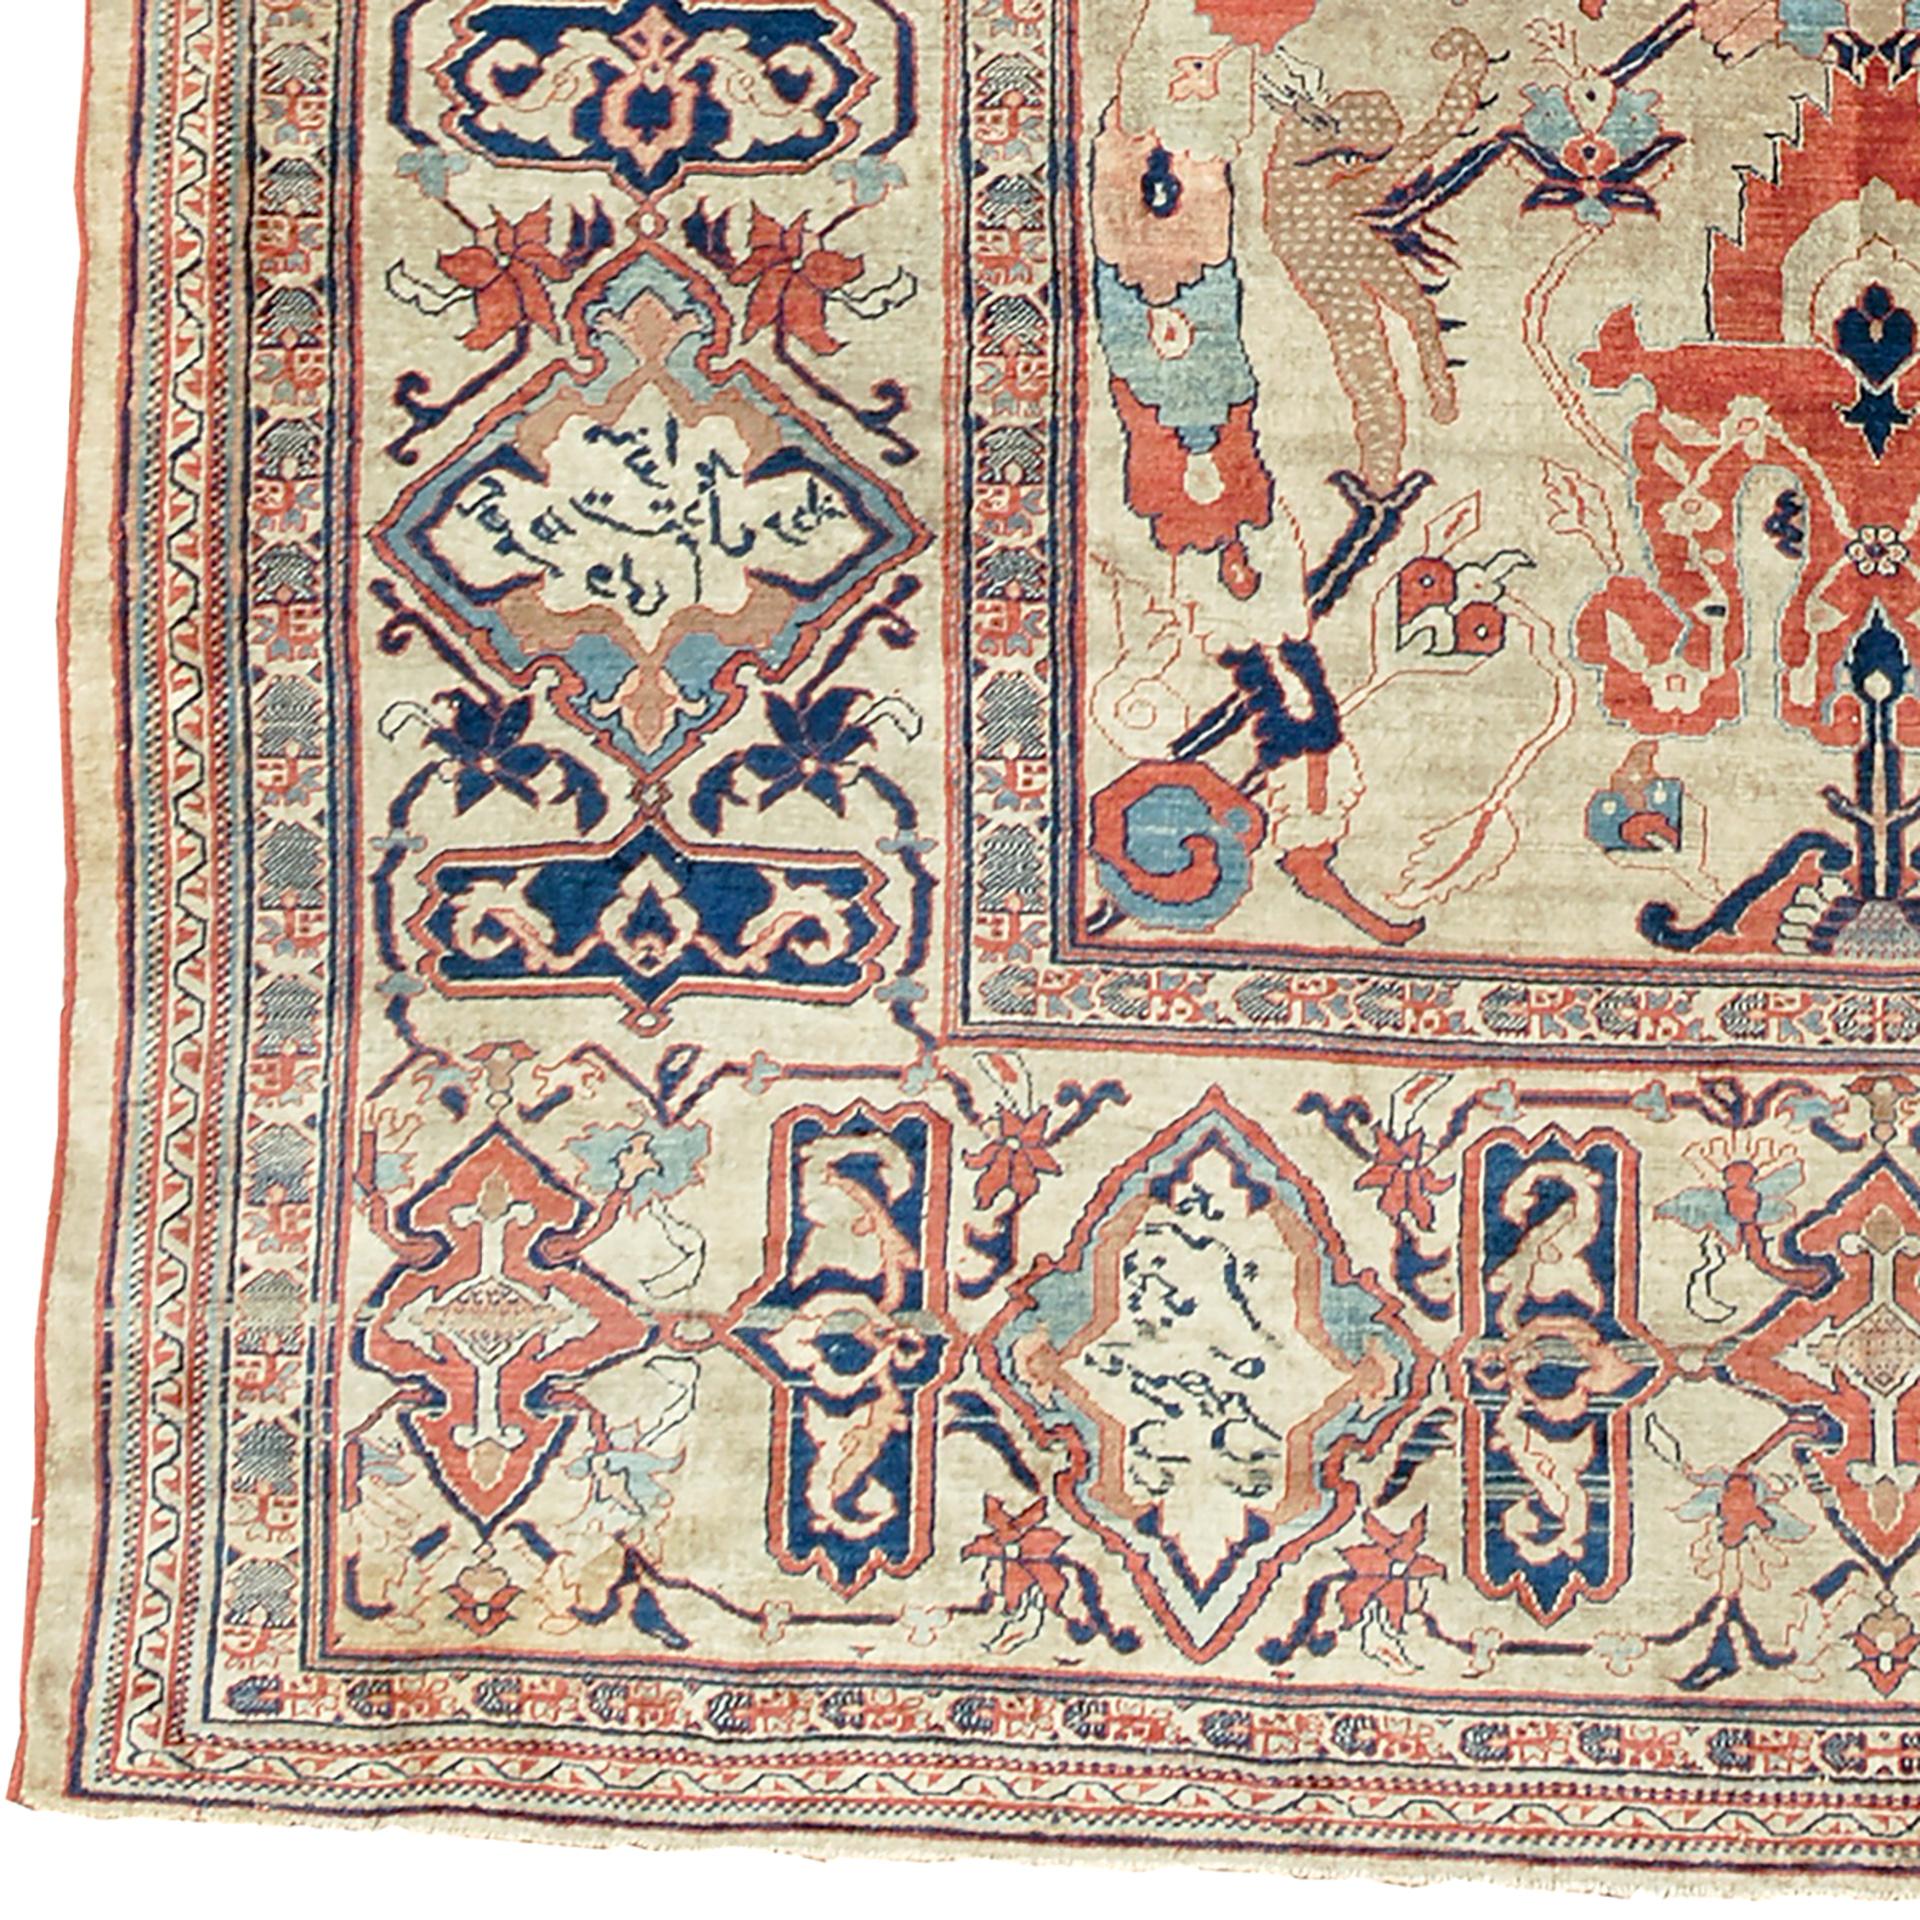 Antique Heriz silk rug
Persia, circa 1900.
Handwoven
6'1